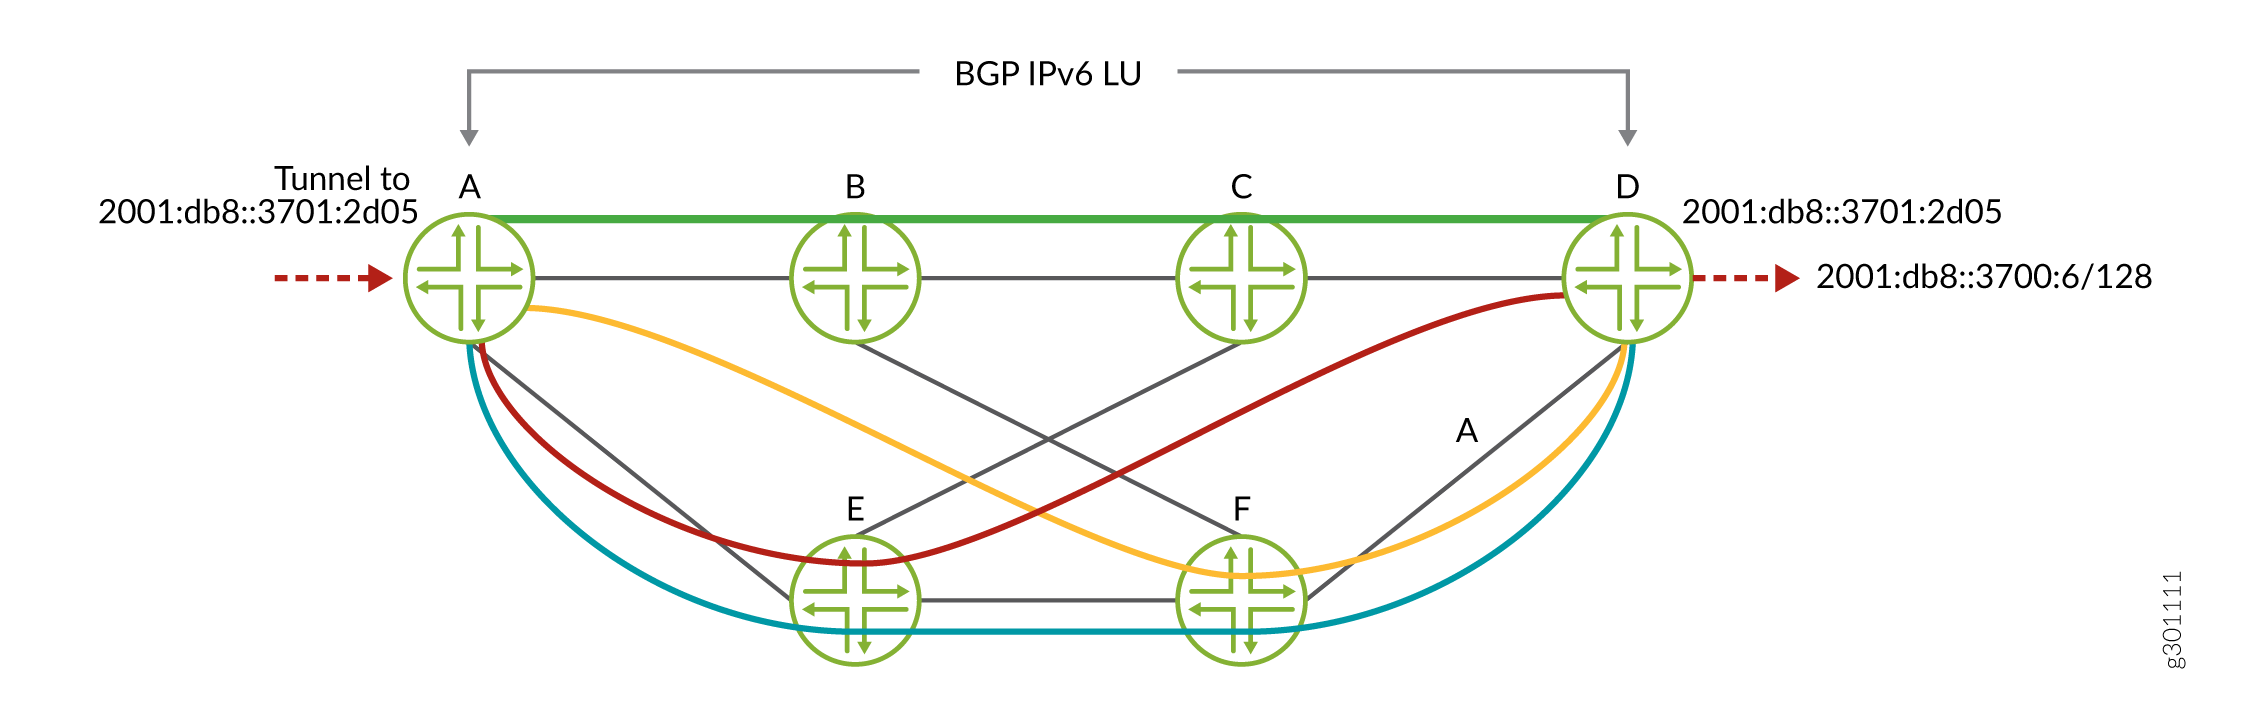 BGP IPv6 LU über farbiges IPv6 SR-TE